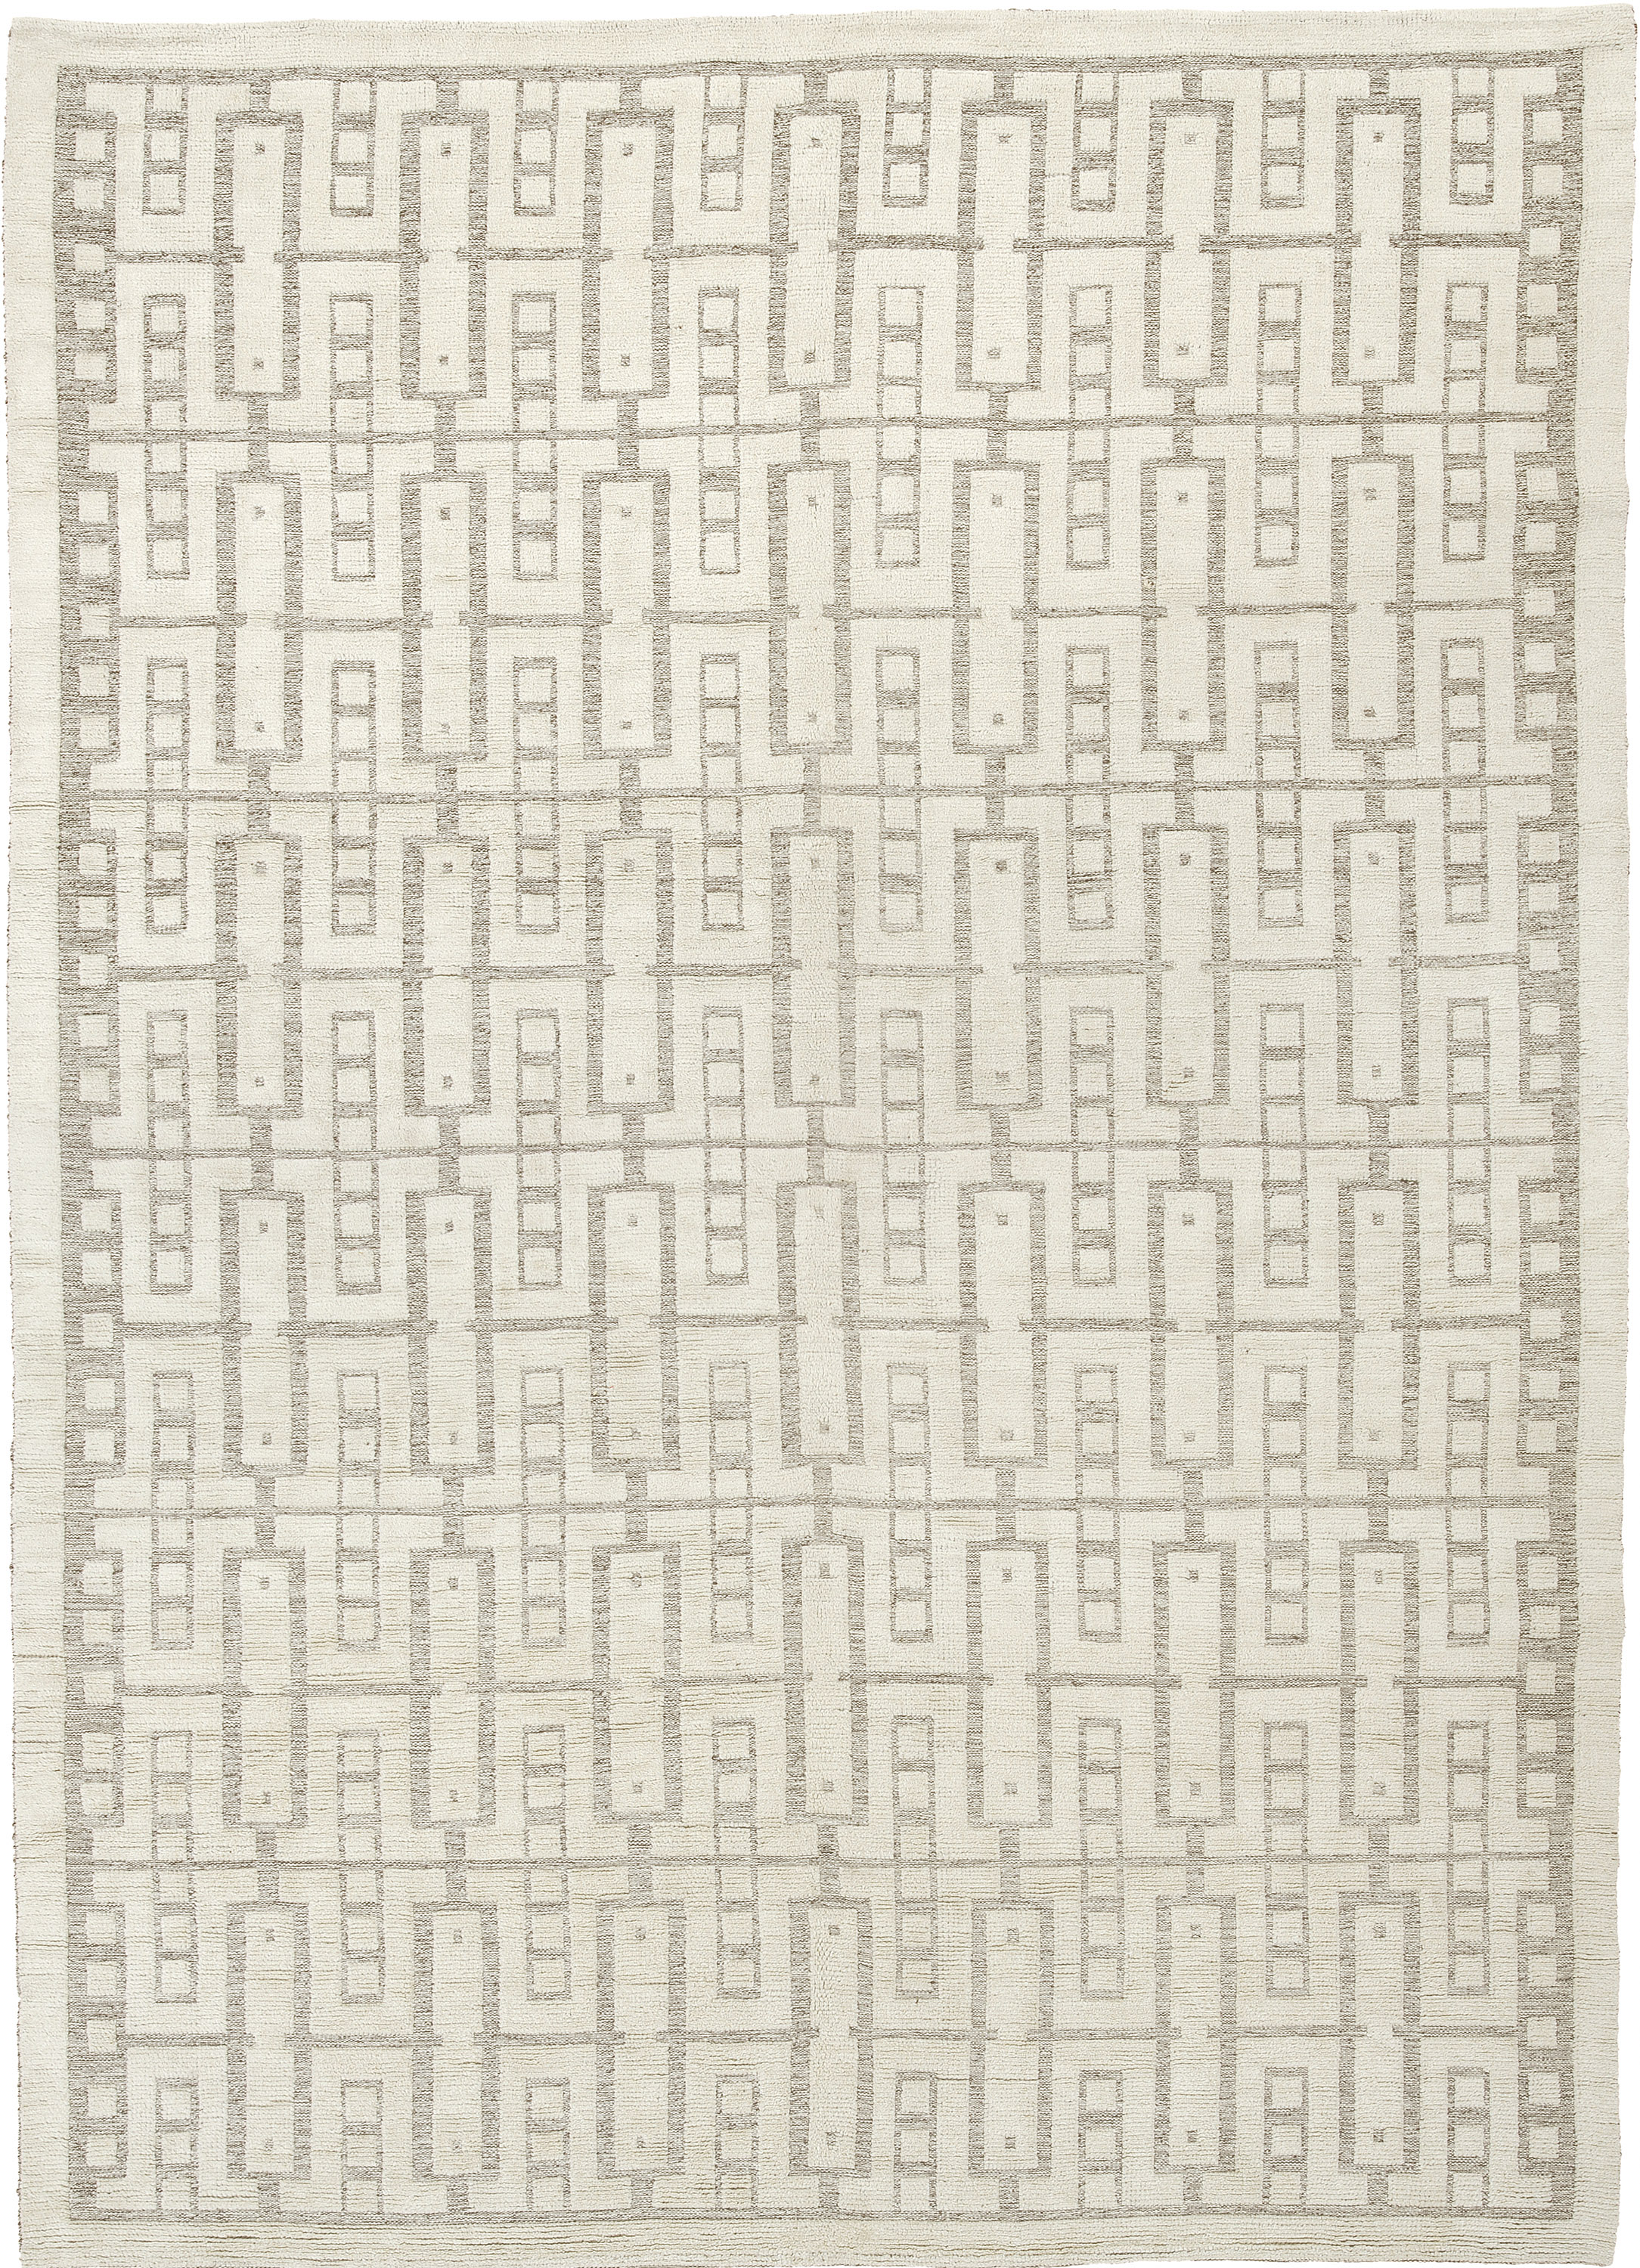 16864 Hilda Design | Custom Swedish Inspired Design Carpet | FJ Hakimian | Carpet Gallery in NYC